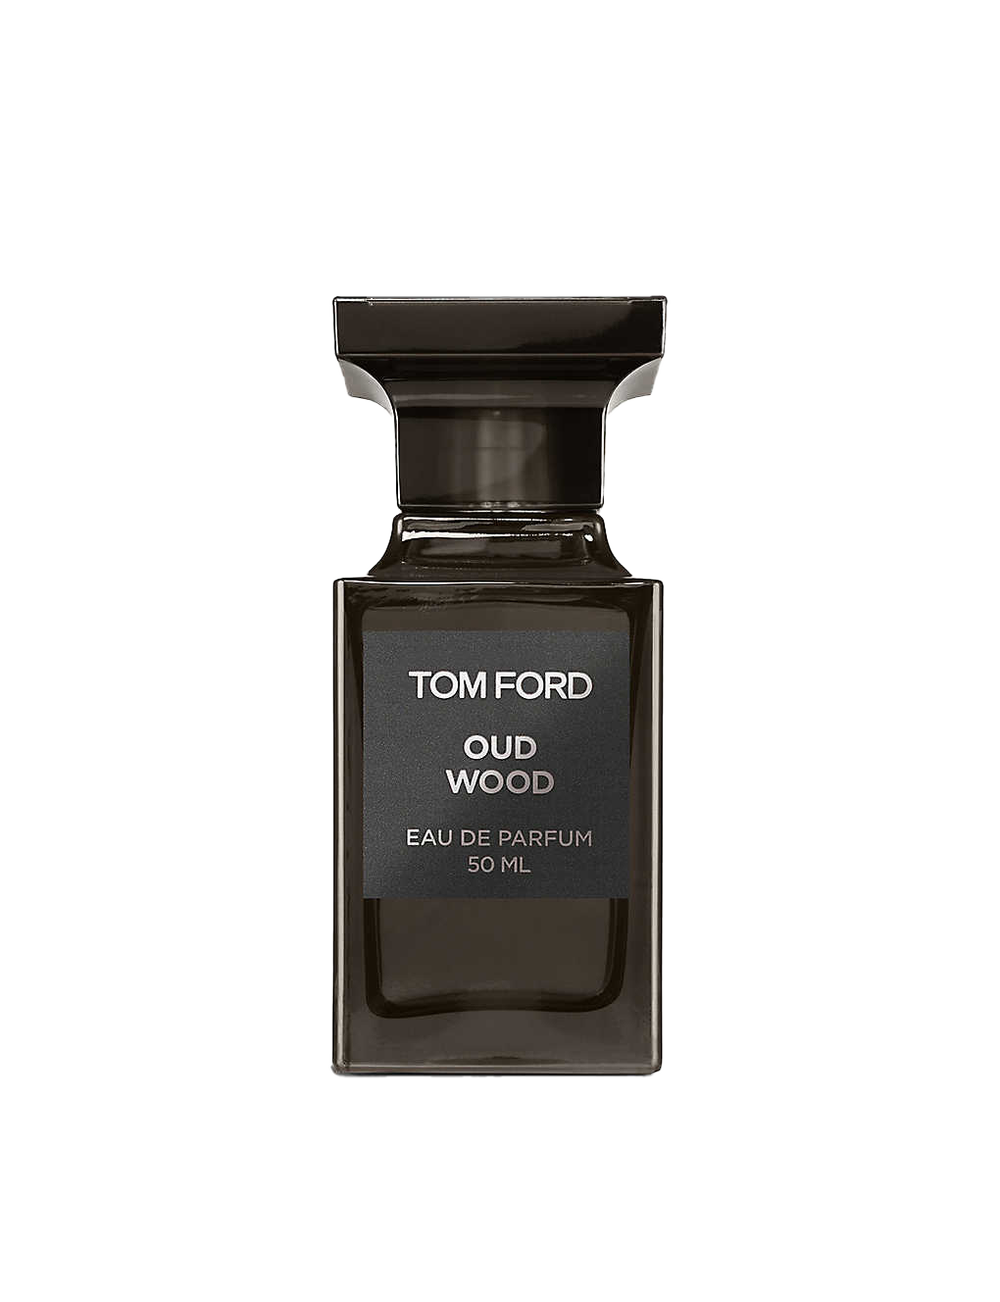 Tom Ford Oud Wood £195